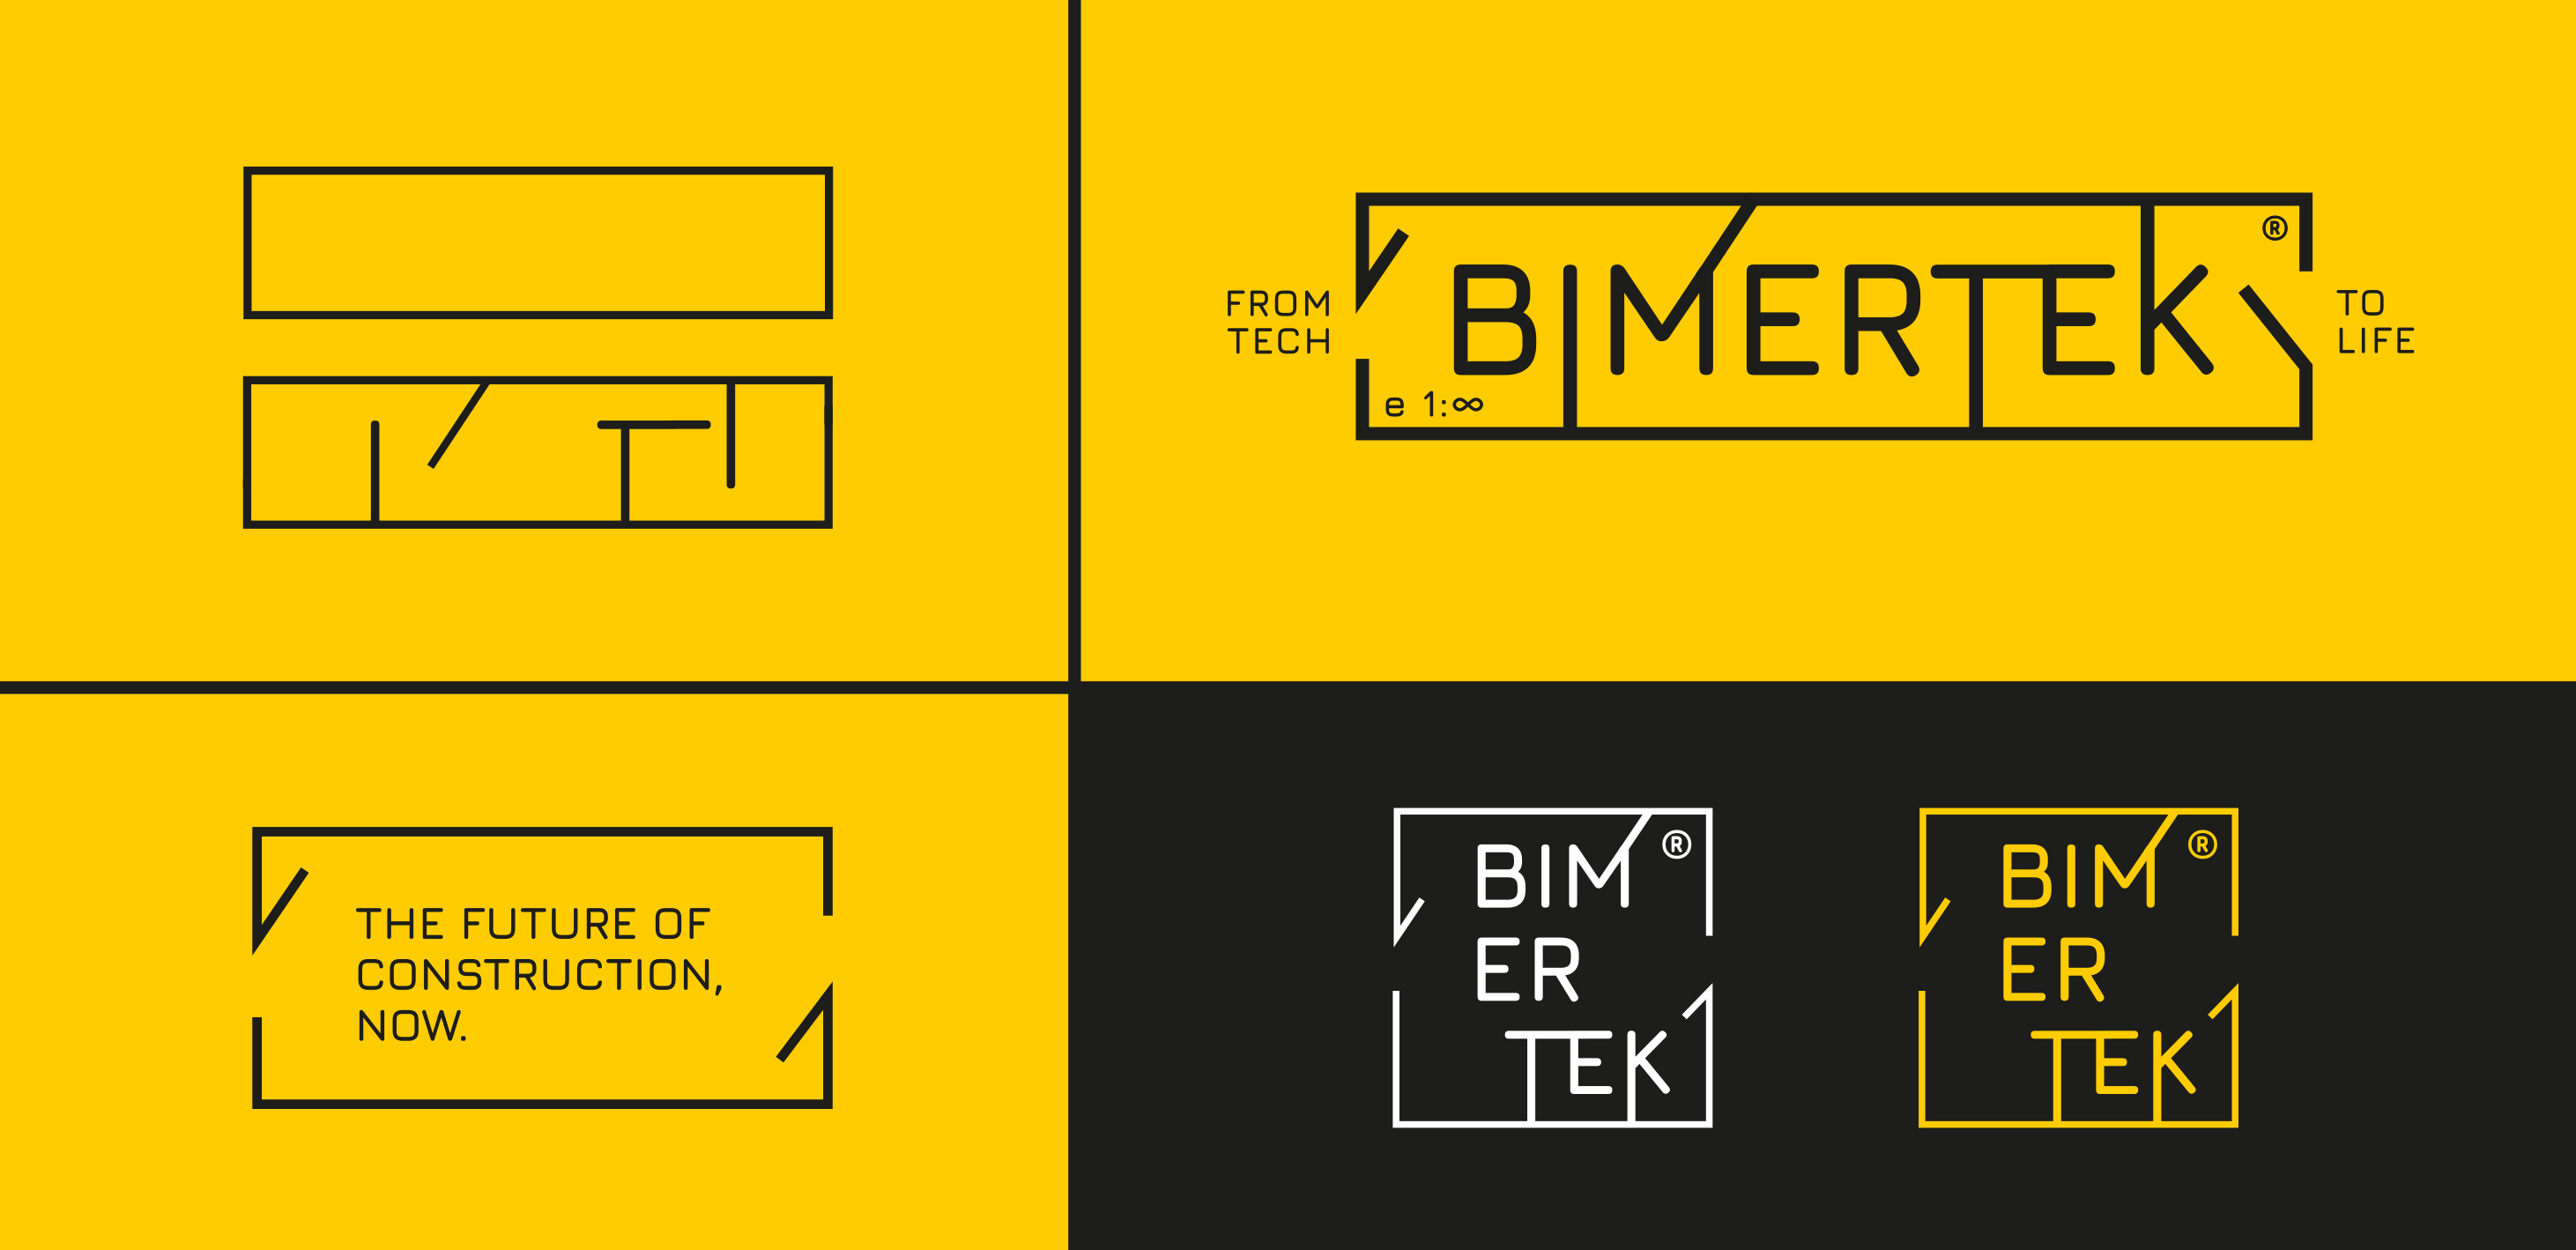 BIMERTEK, FROM TECH TO LIFE by TACTICCO BRANDPARTNERS STUDIO - Creative Work